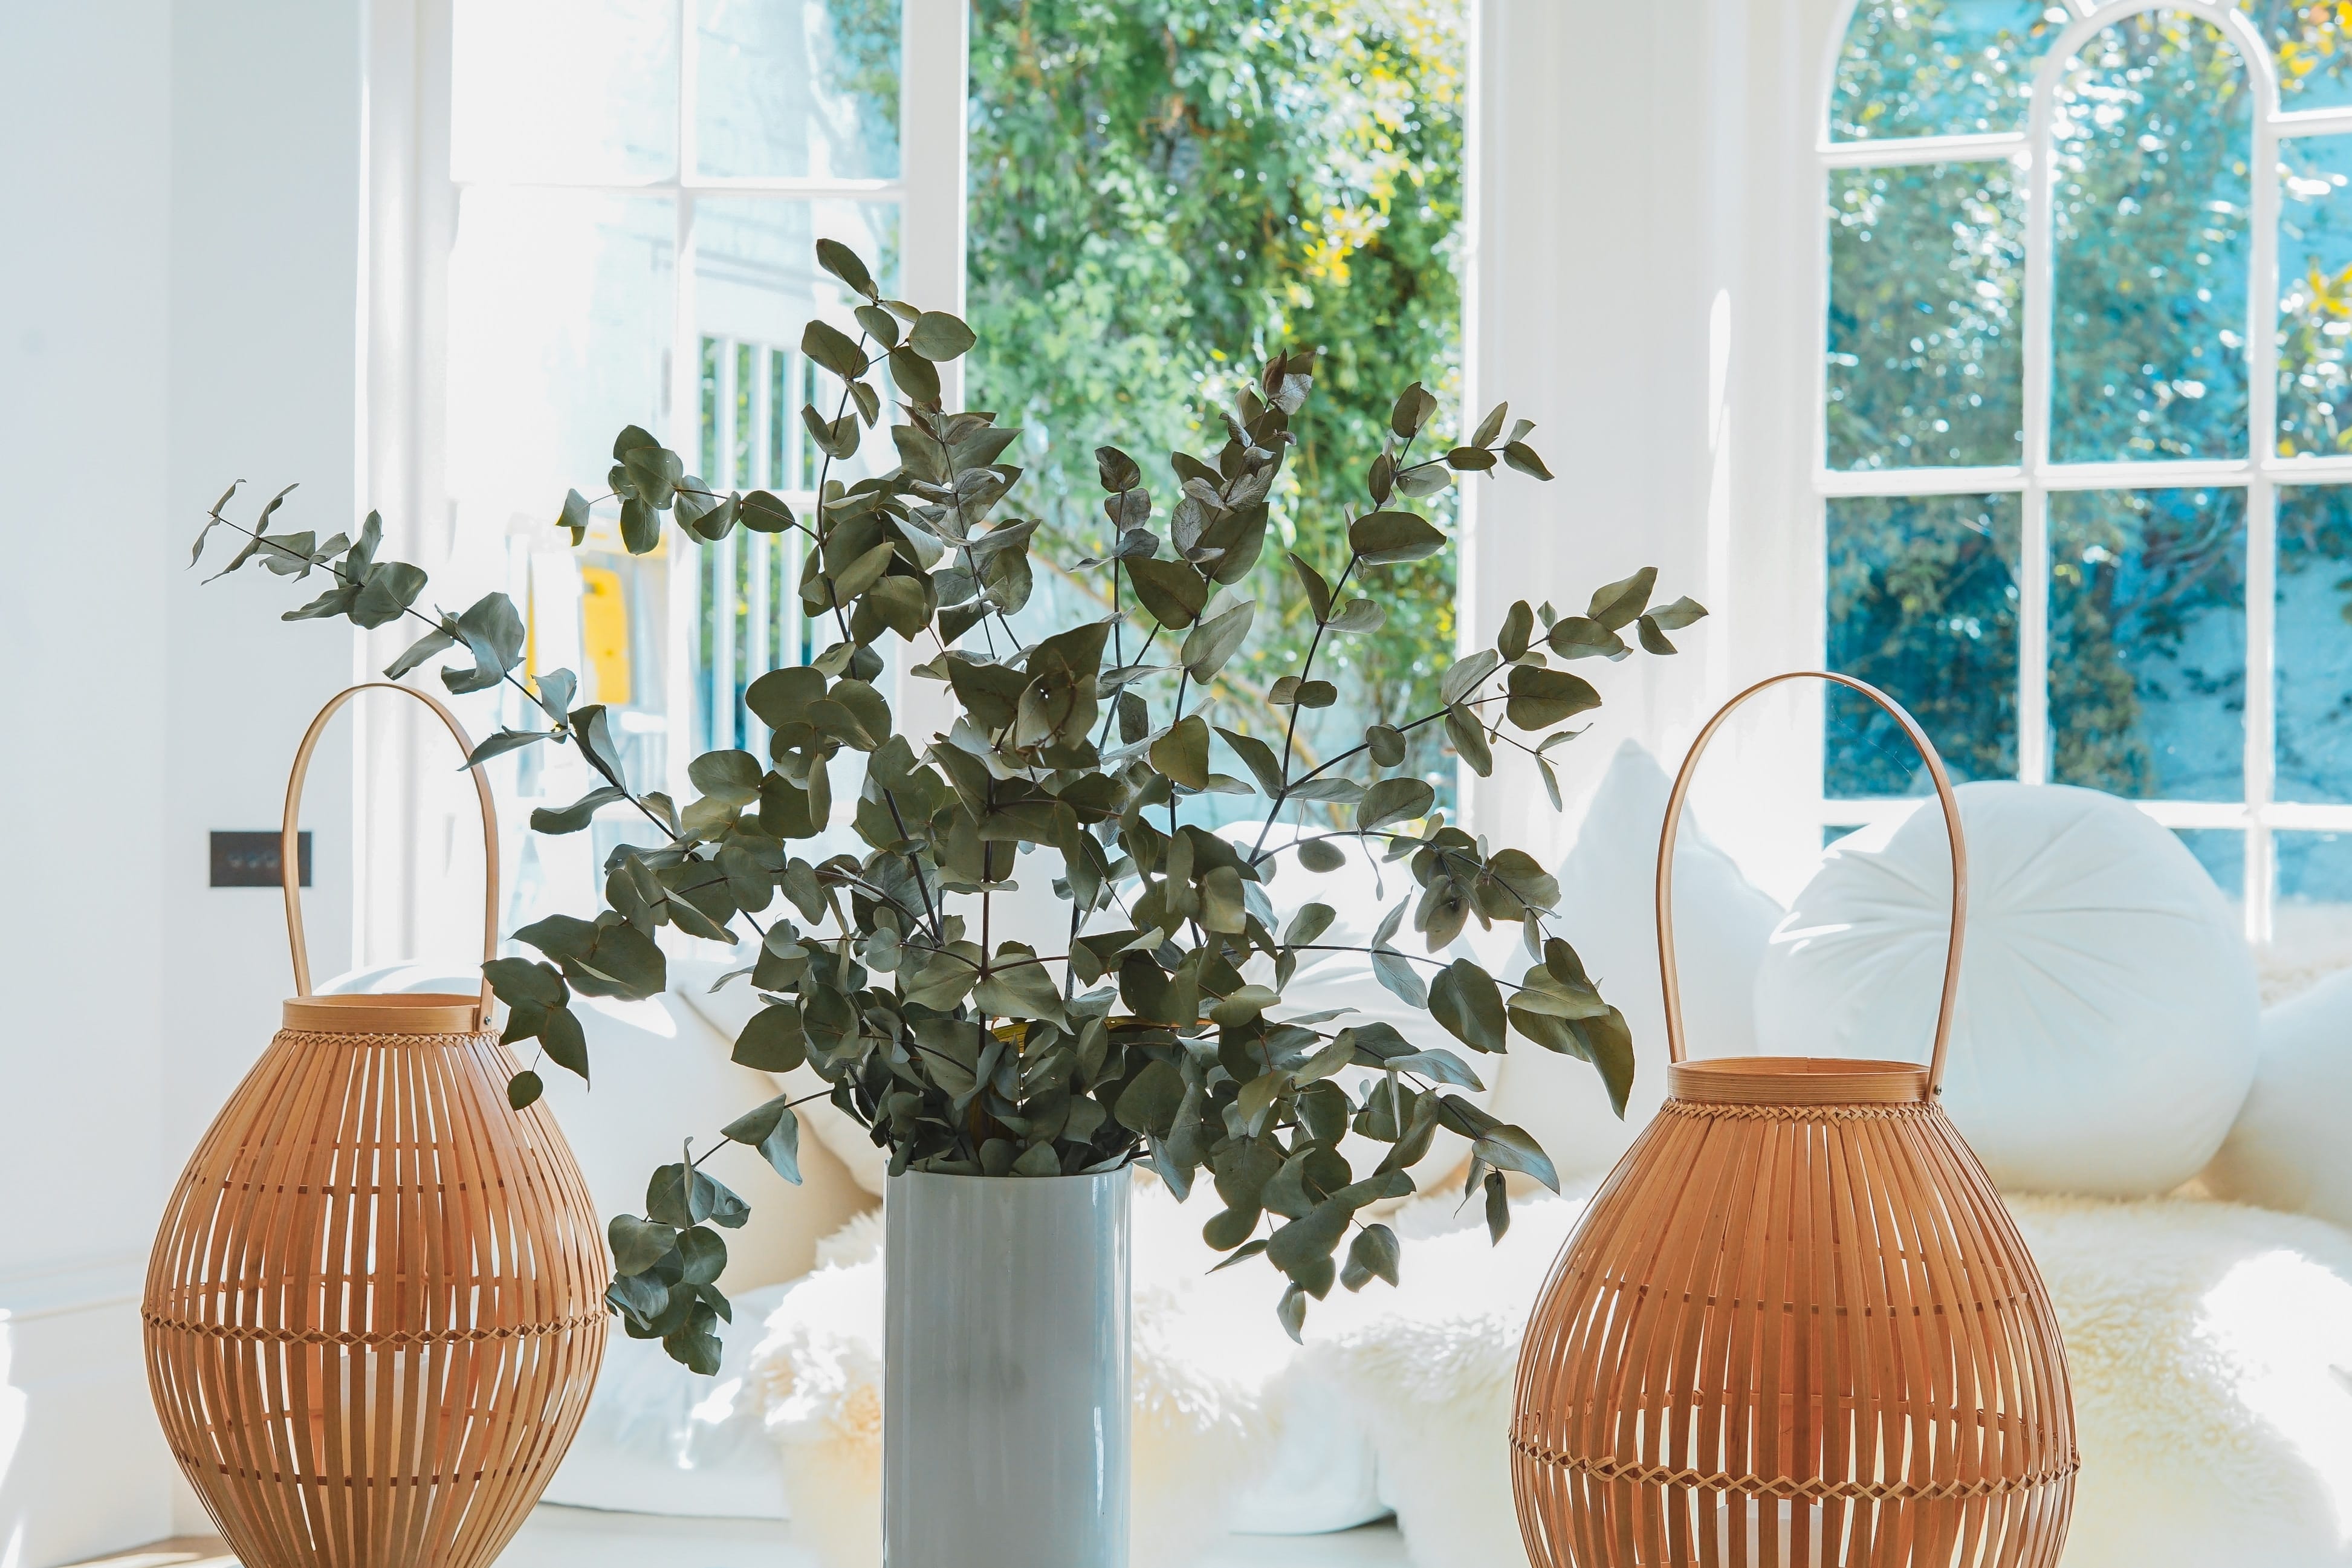 Ornamental eucalyptus in a vase on a table in a white room; image by Toa Heftiba, via Unsplash.com.